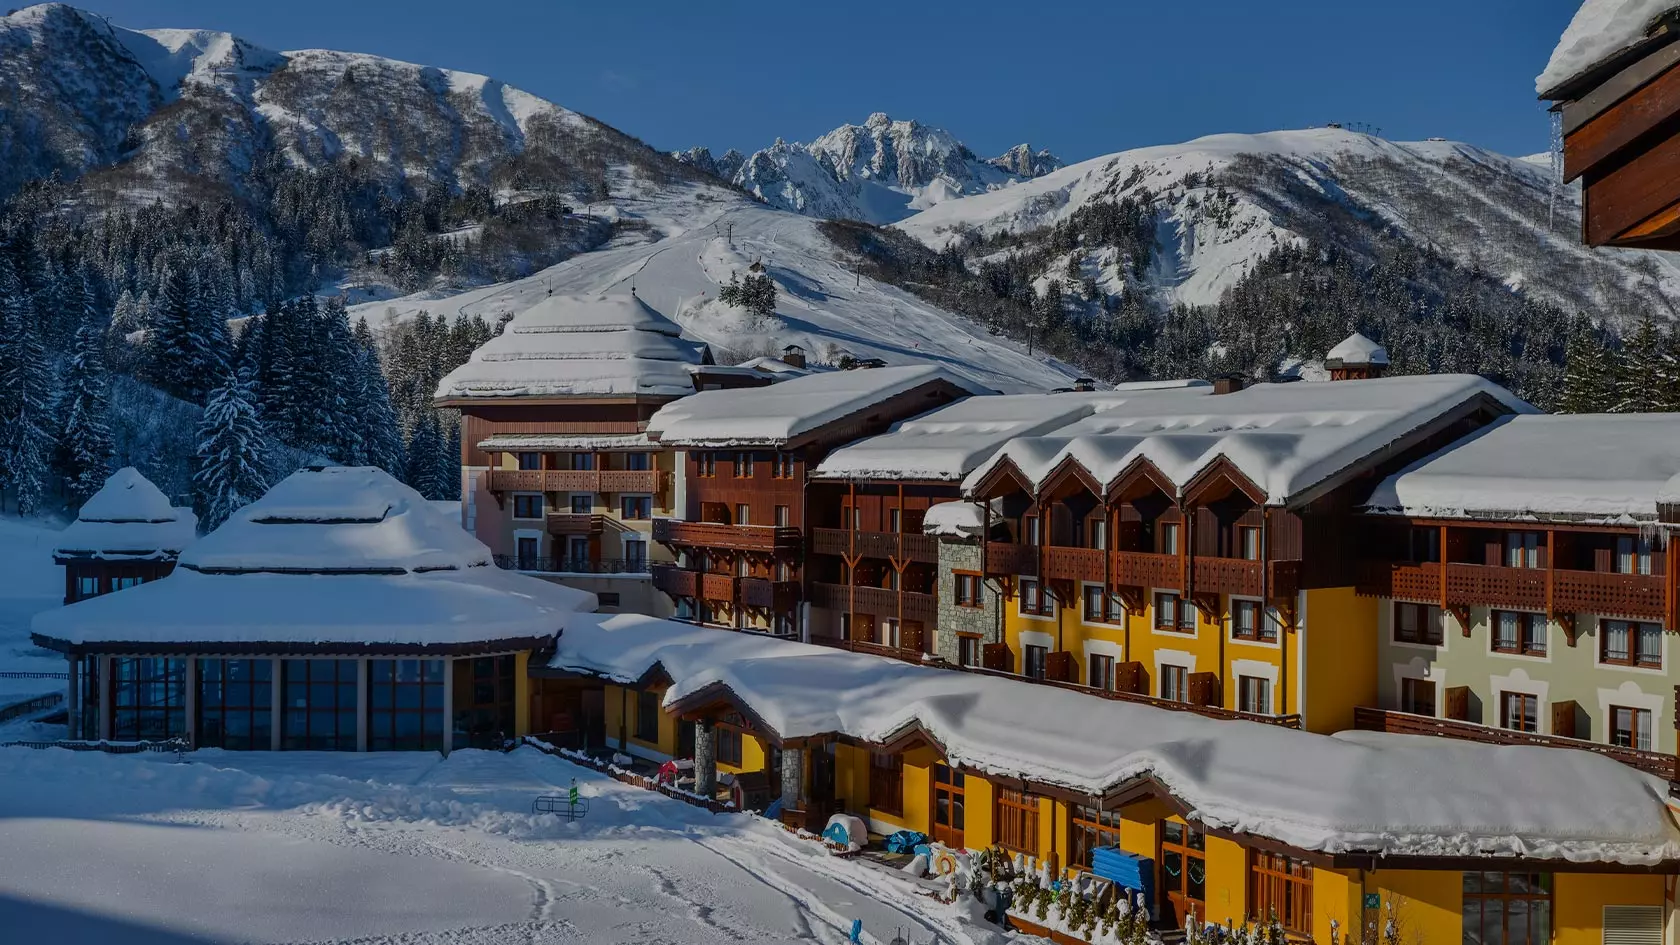 Club Med Villages de Neve | Resorts na Europa e Canadá | Litoral Verde